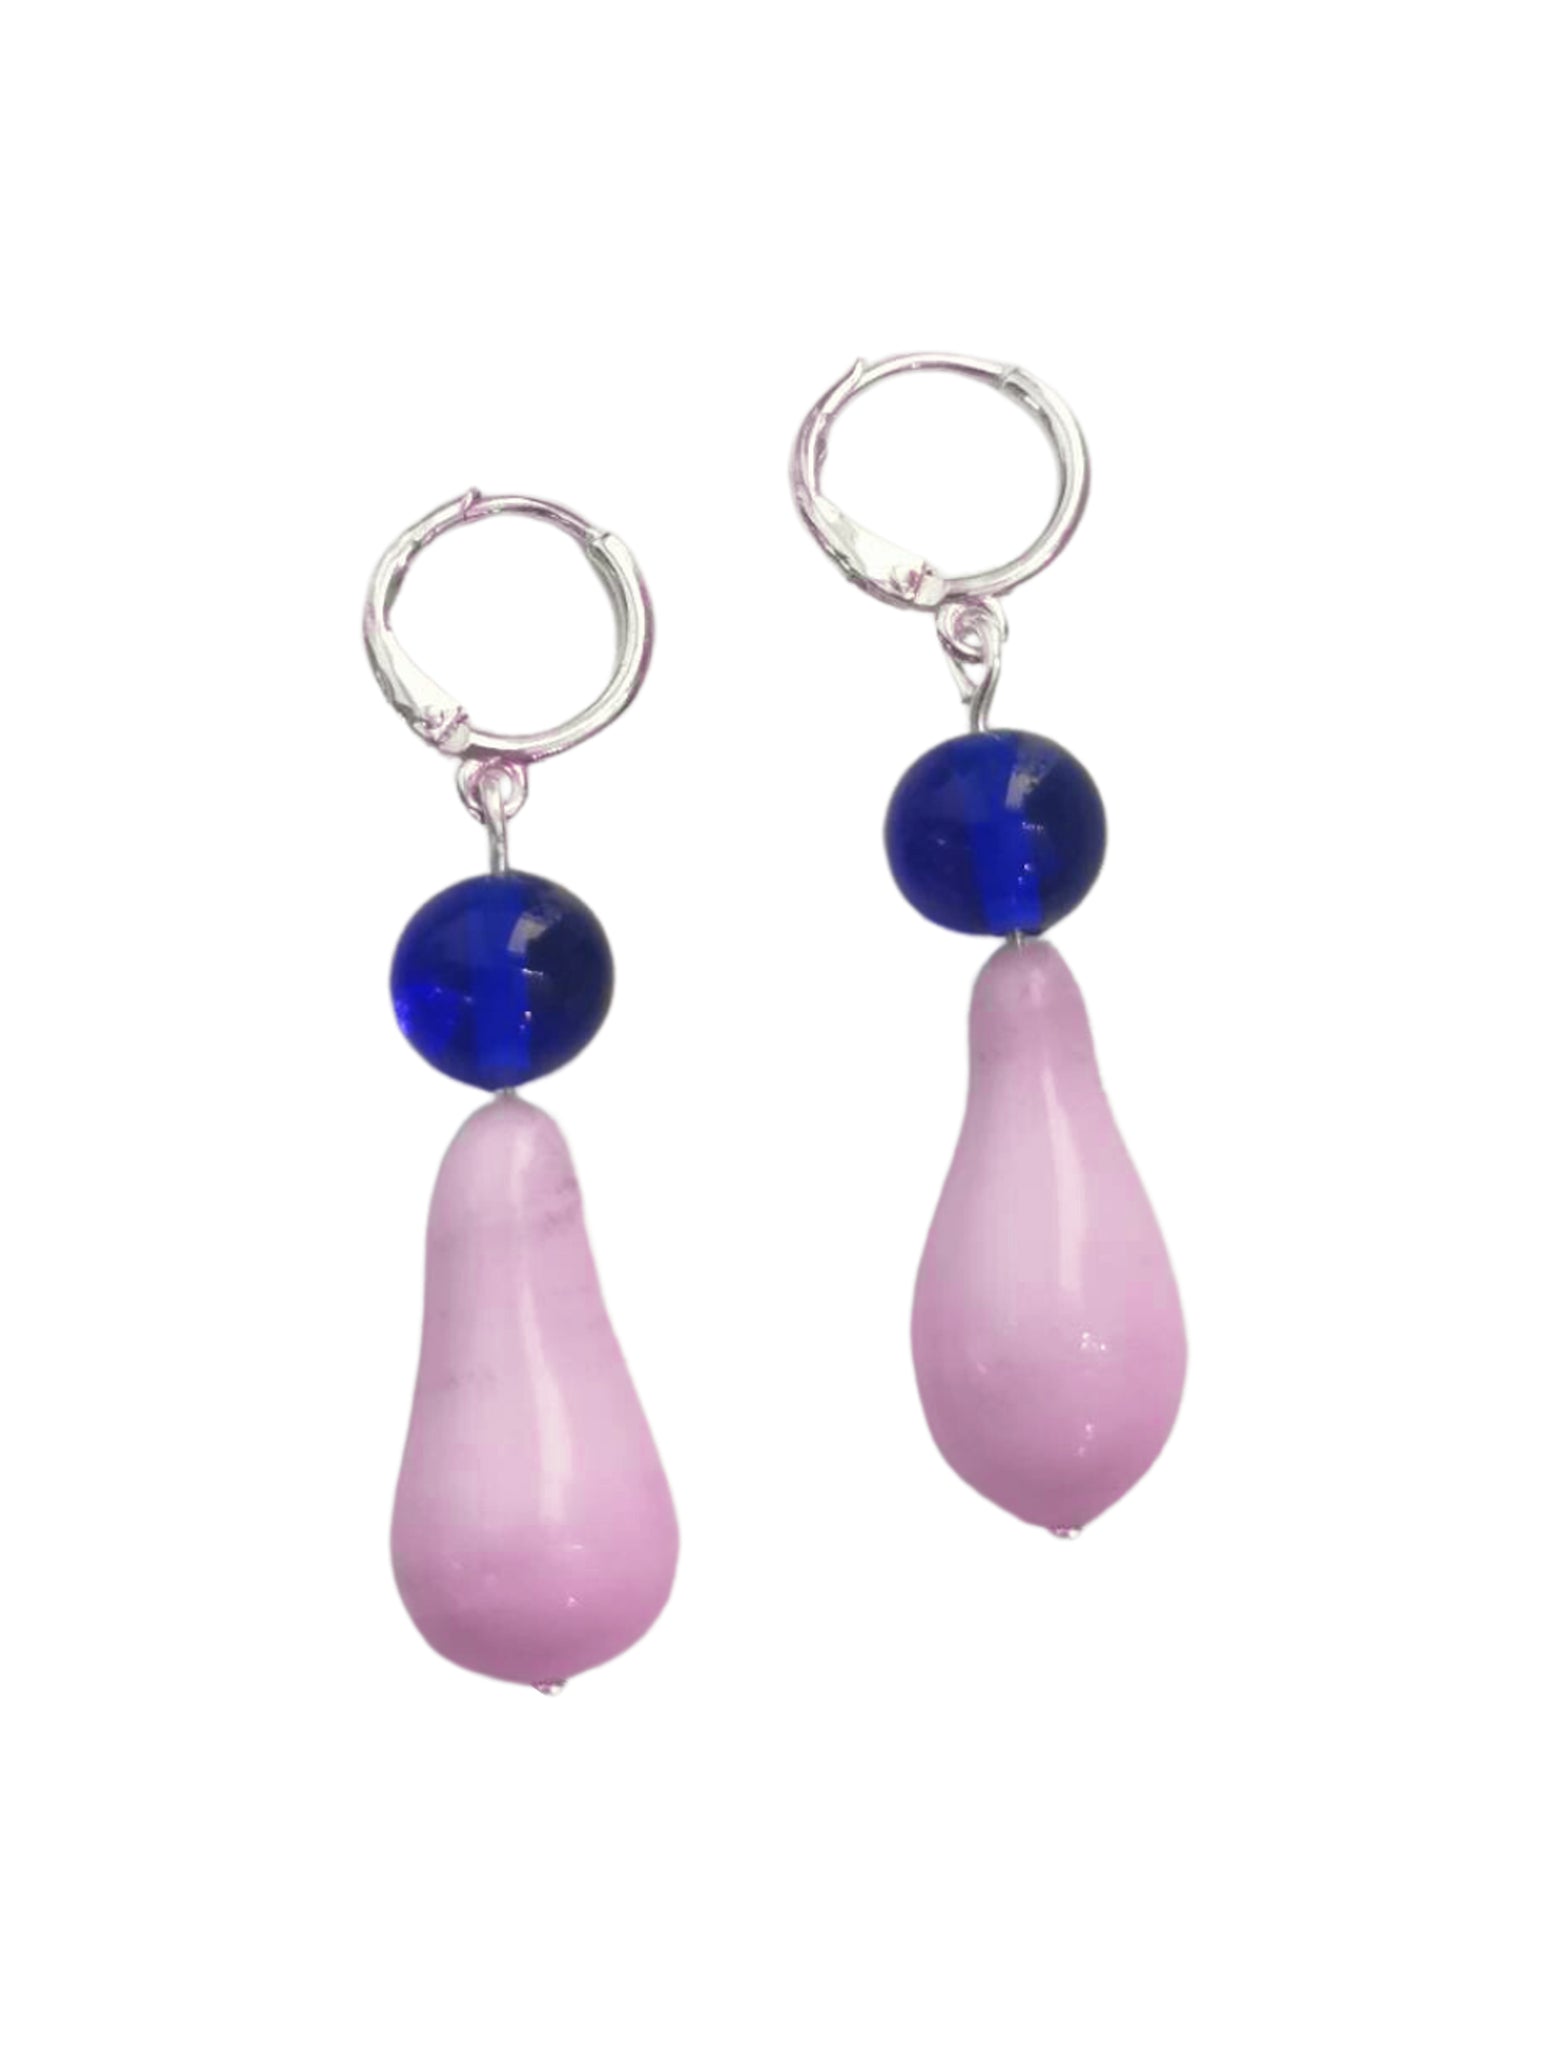 LaLa earrings, Royal blue & Pink Gelly